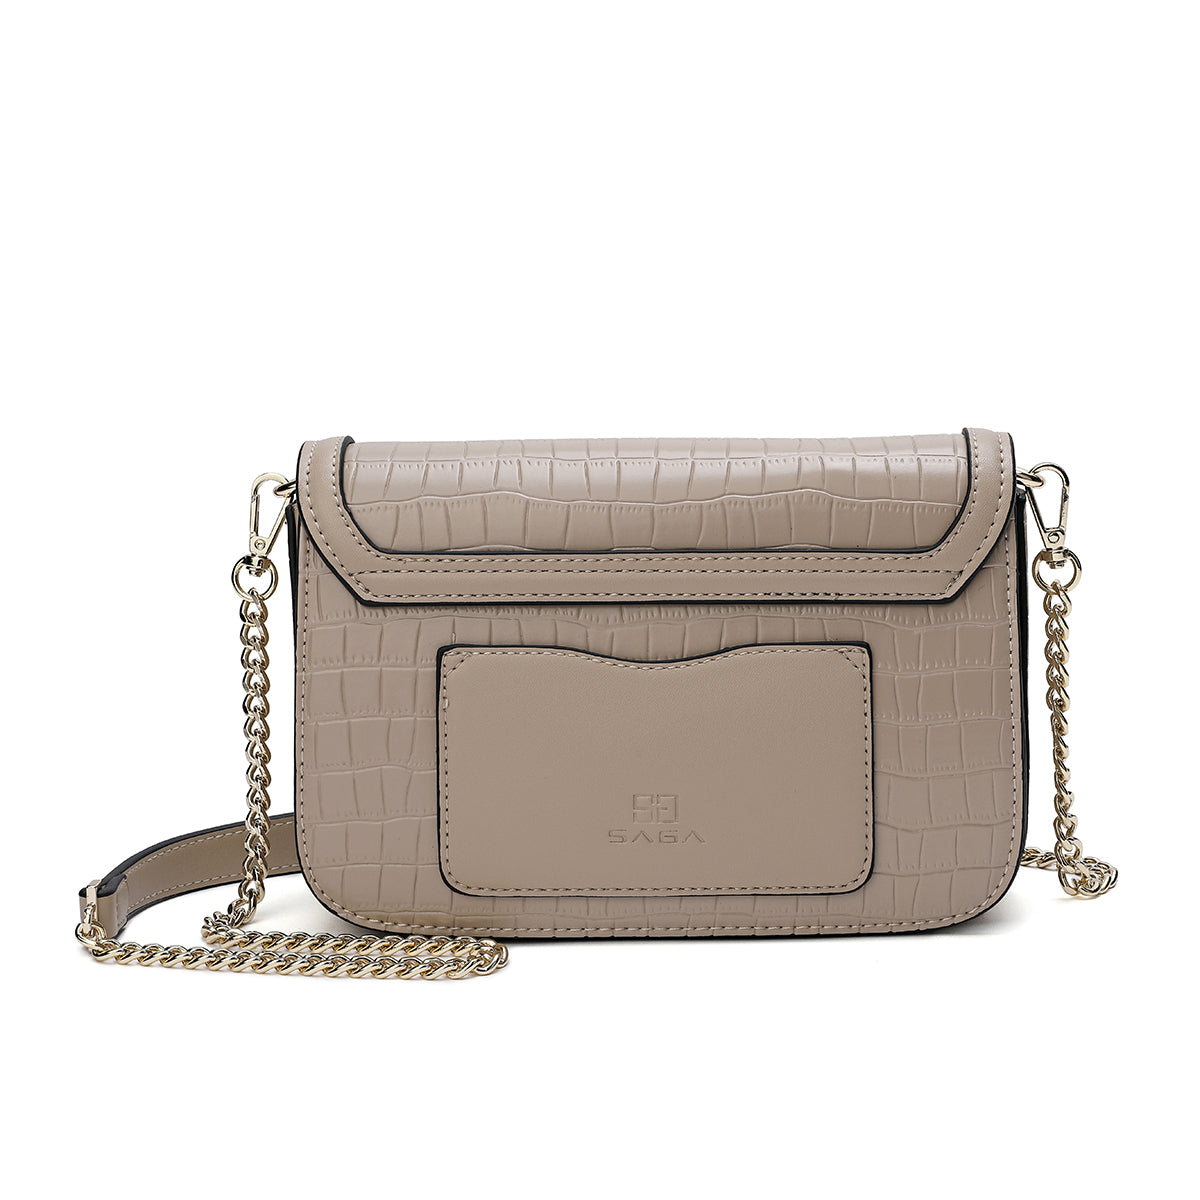 Elegant women's handbag, 22 cm wide, in green or beige